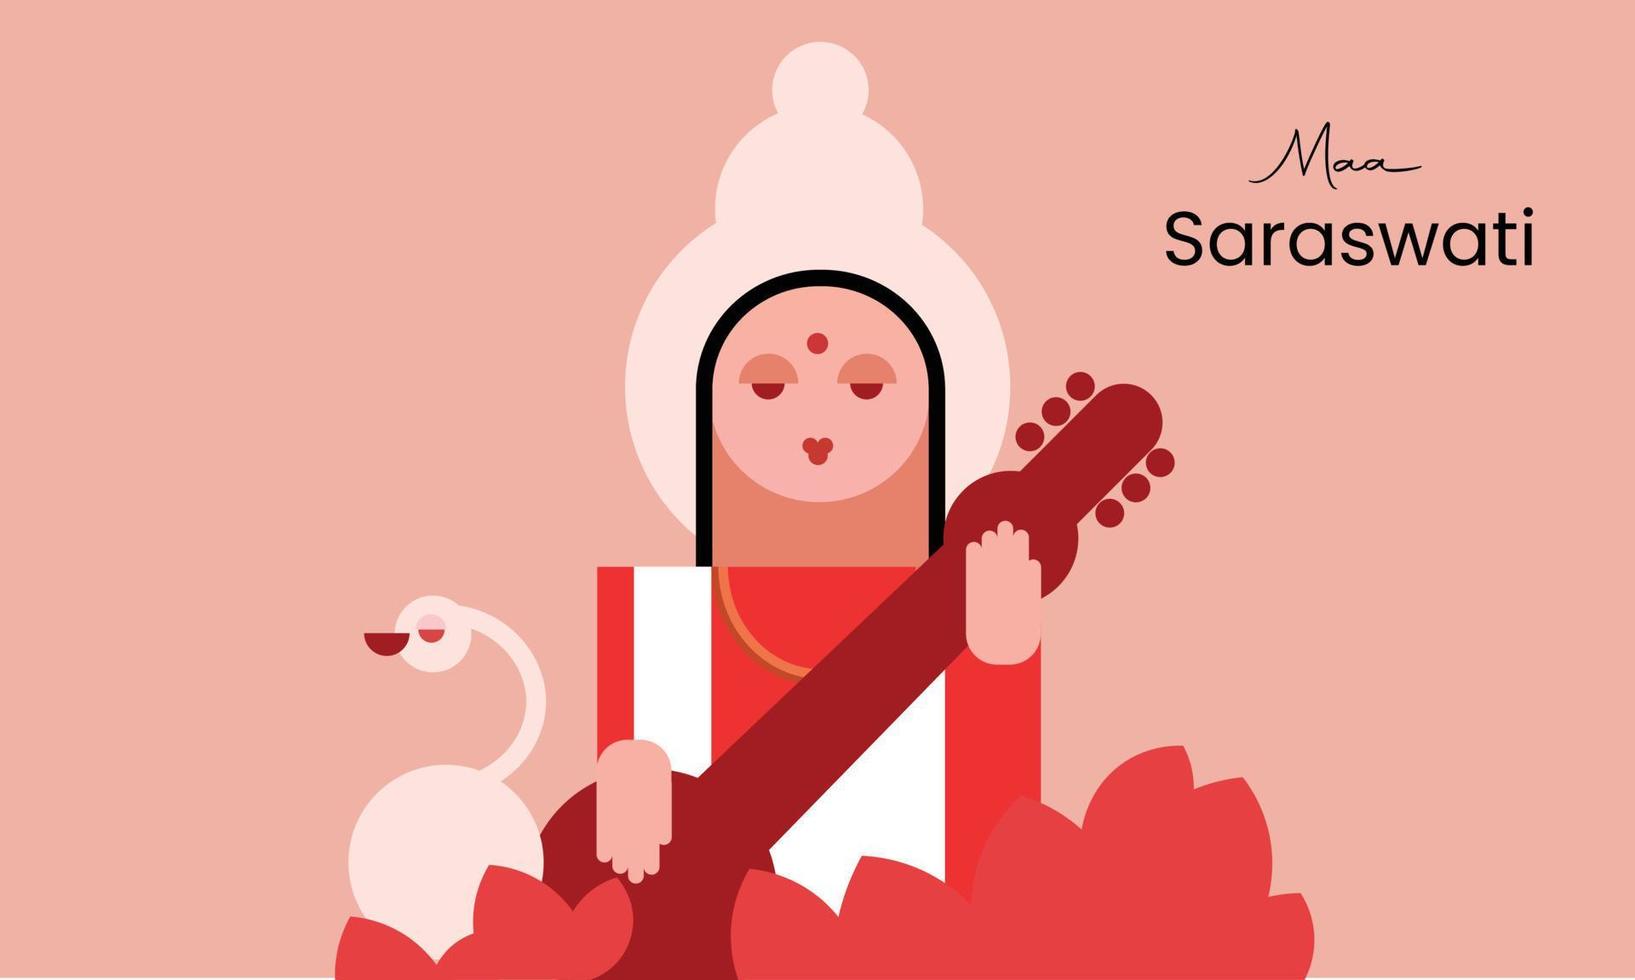 Maa Saraswati vector illustration. Goddess of Wisdom, music, and knowledge for Vasant Panchami or Basant Panchami festival.